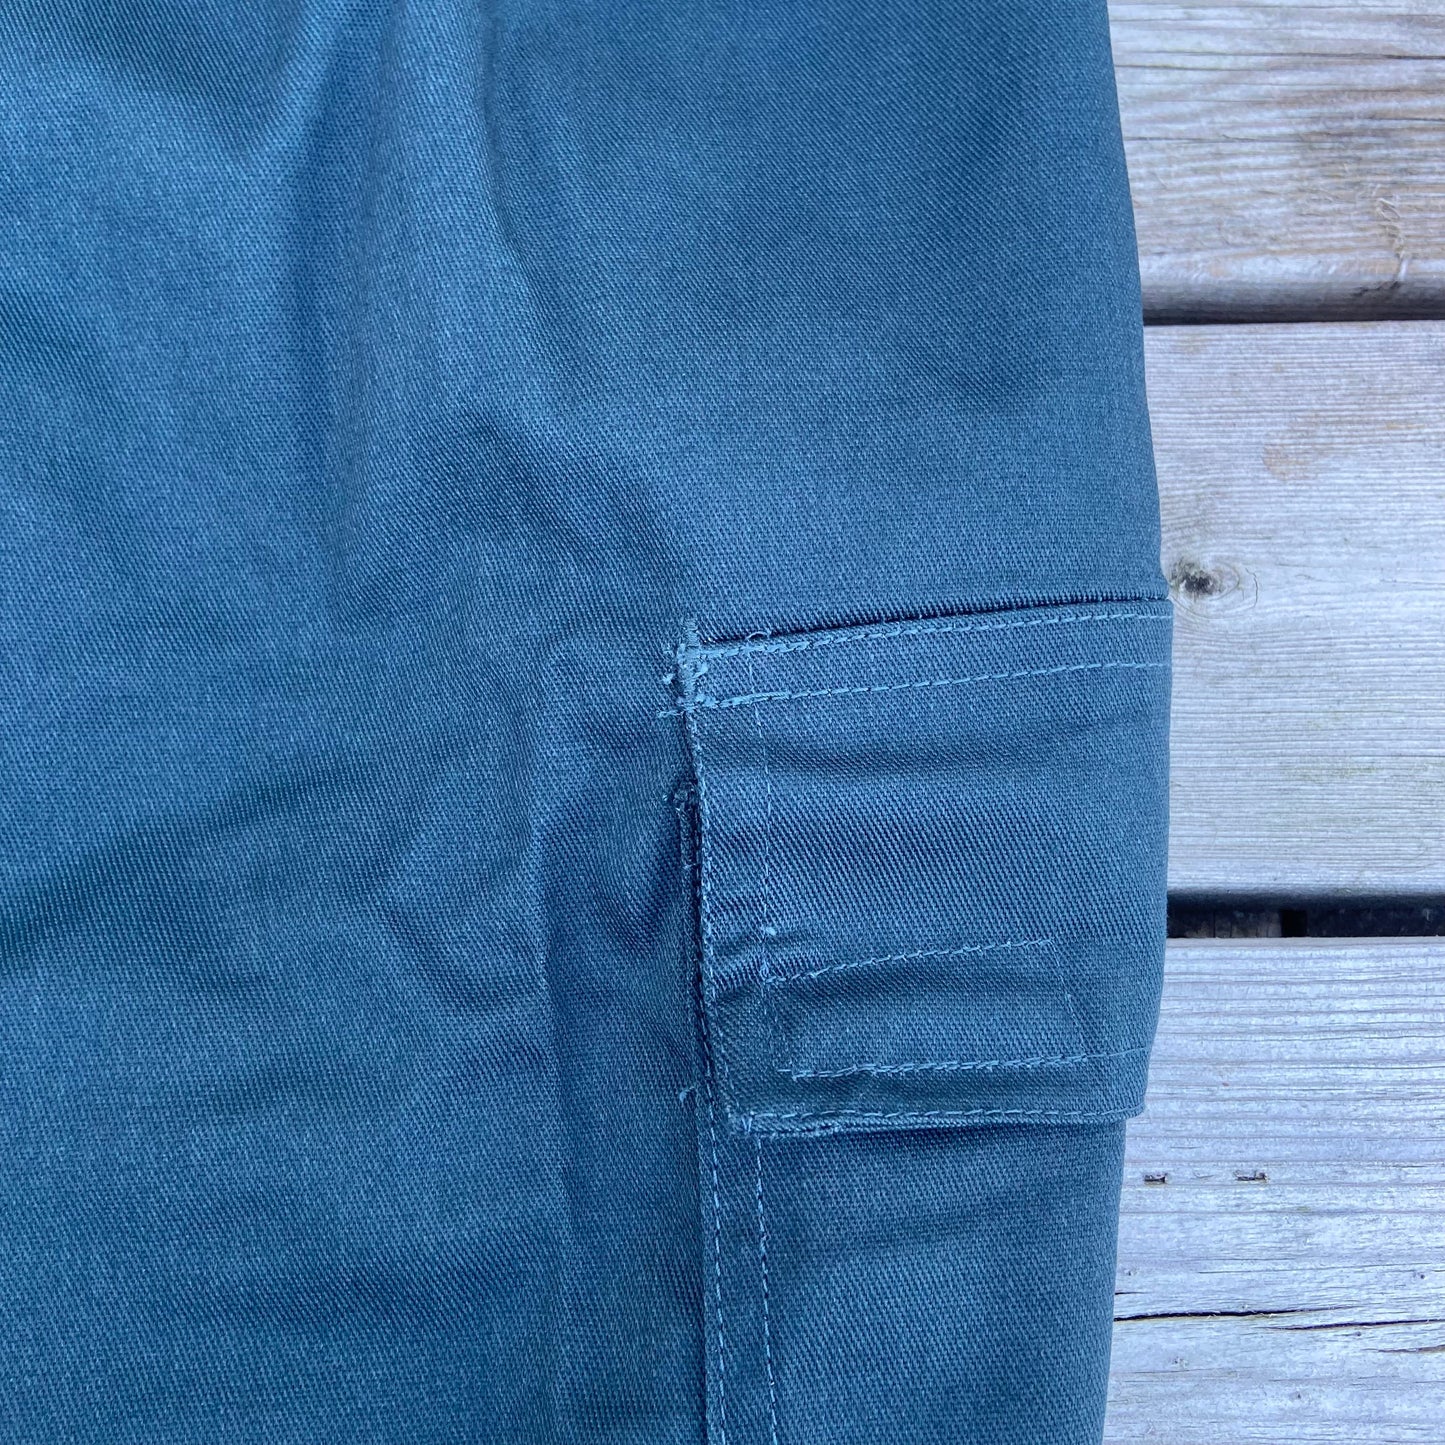 30" Regular Green Combat Trousers